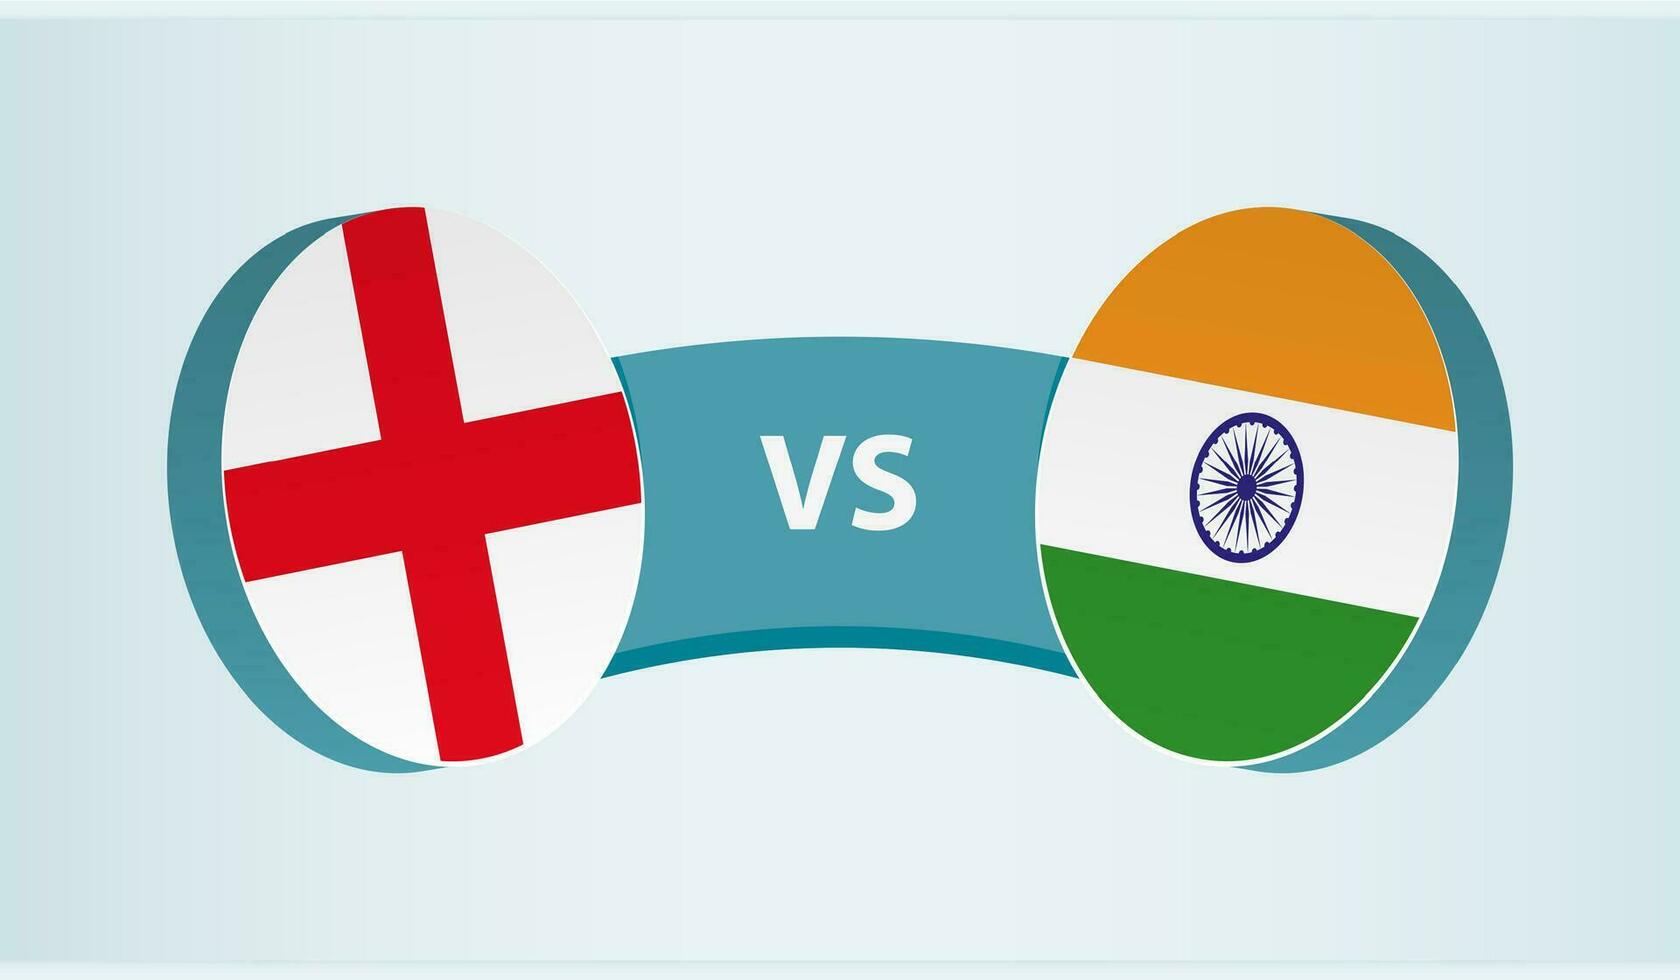 Inglaterra versus Índia, equipe Esportes concorrência conceito. vetor